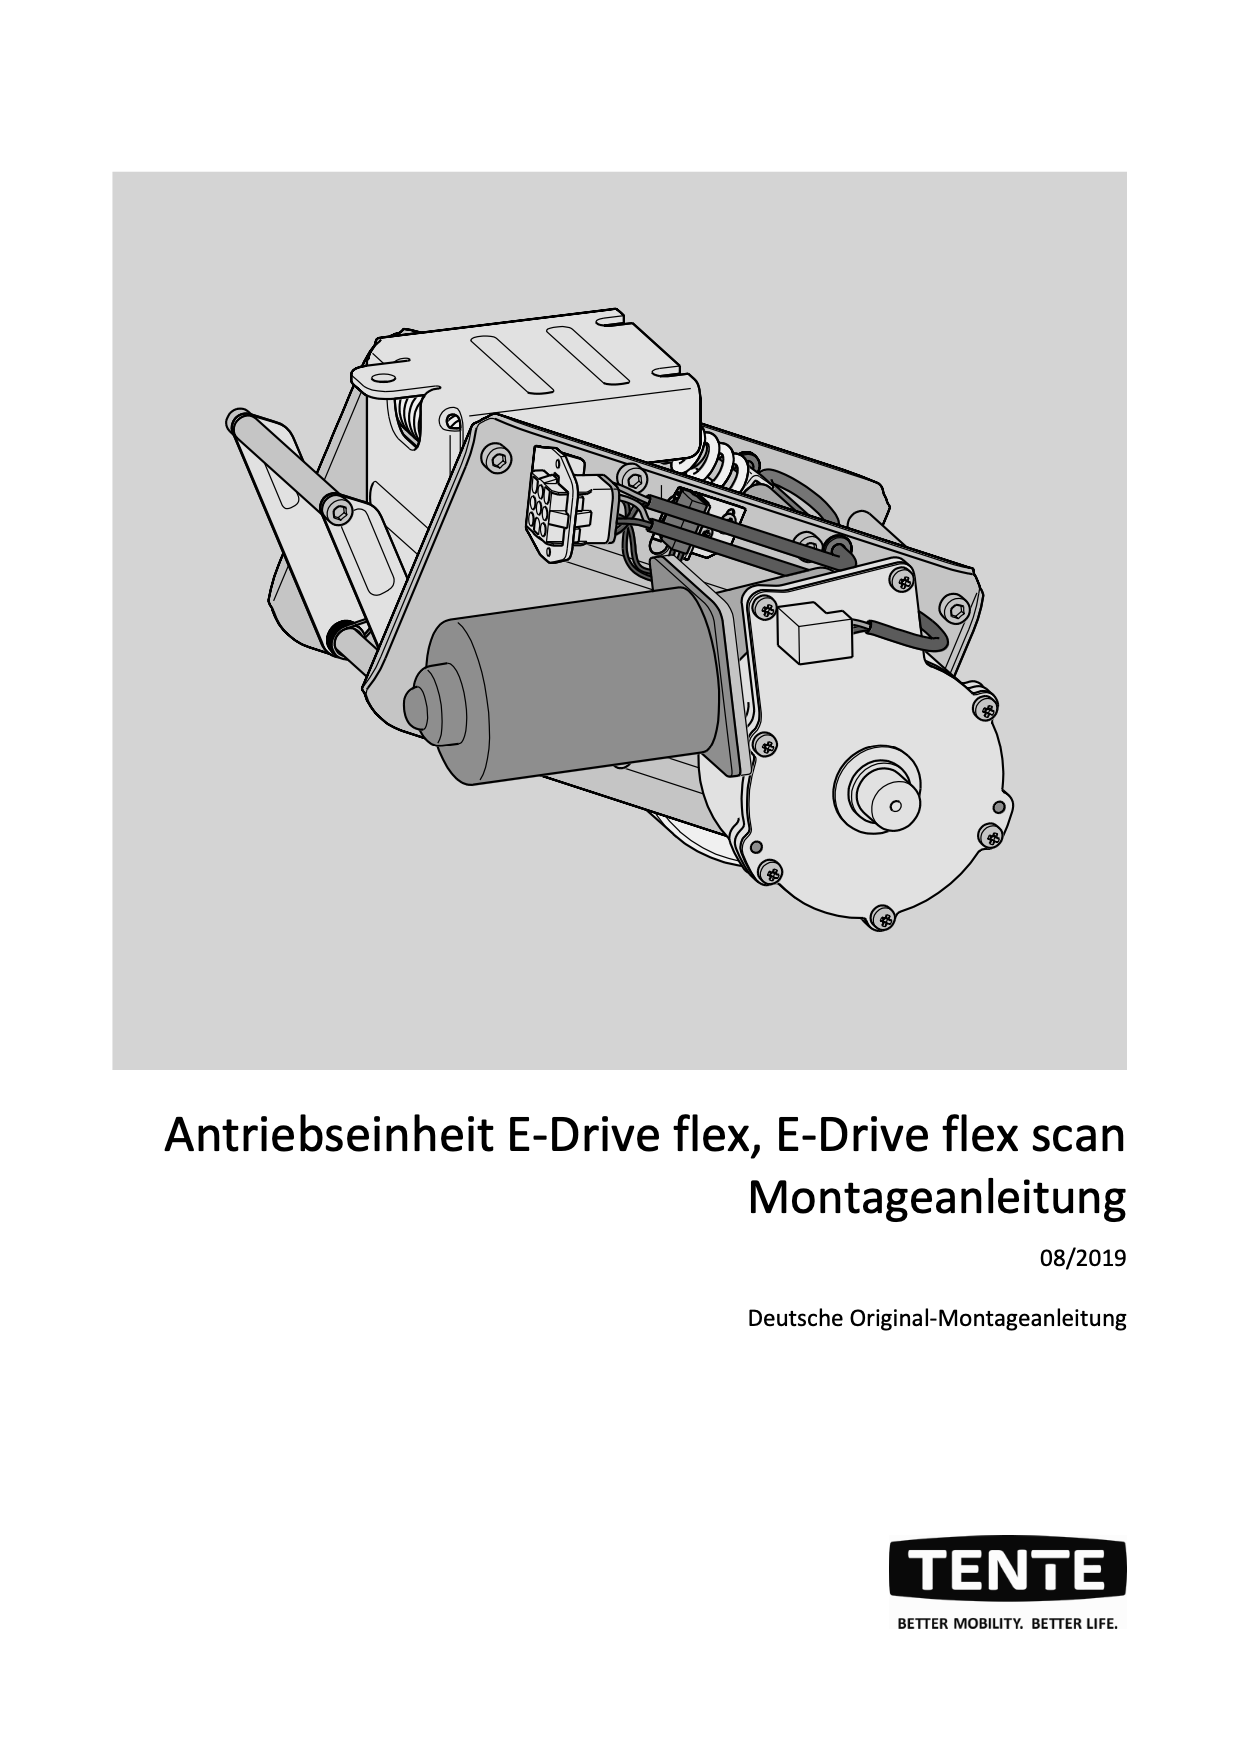 Montageanleitung E-Drive flex und E-Drive flex scan